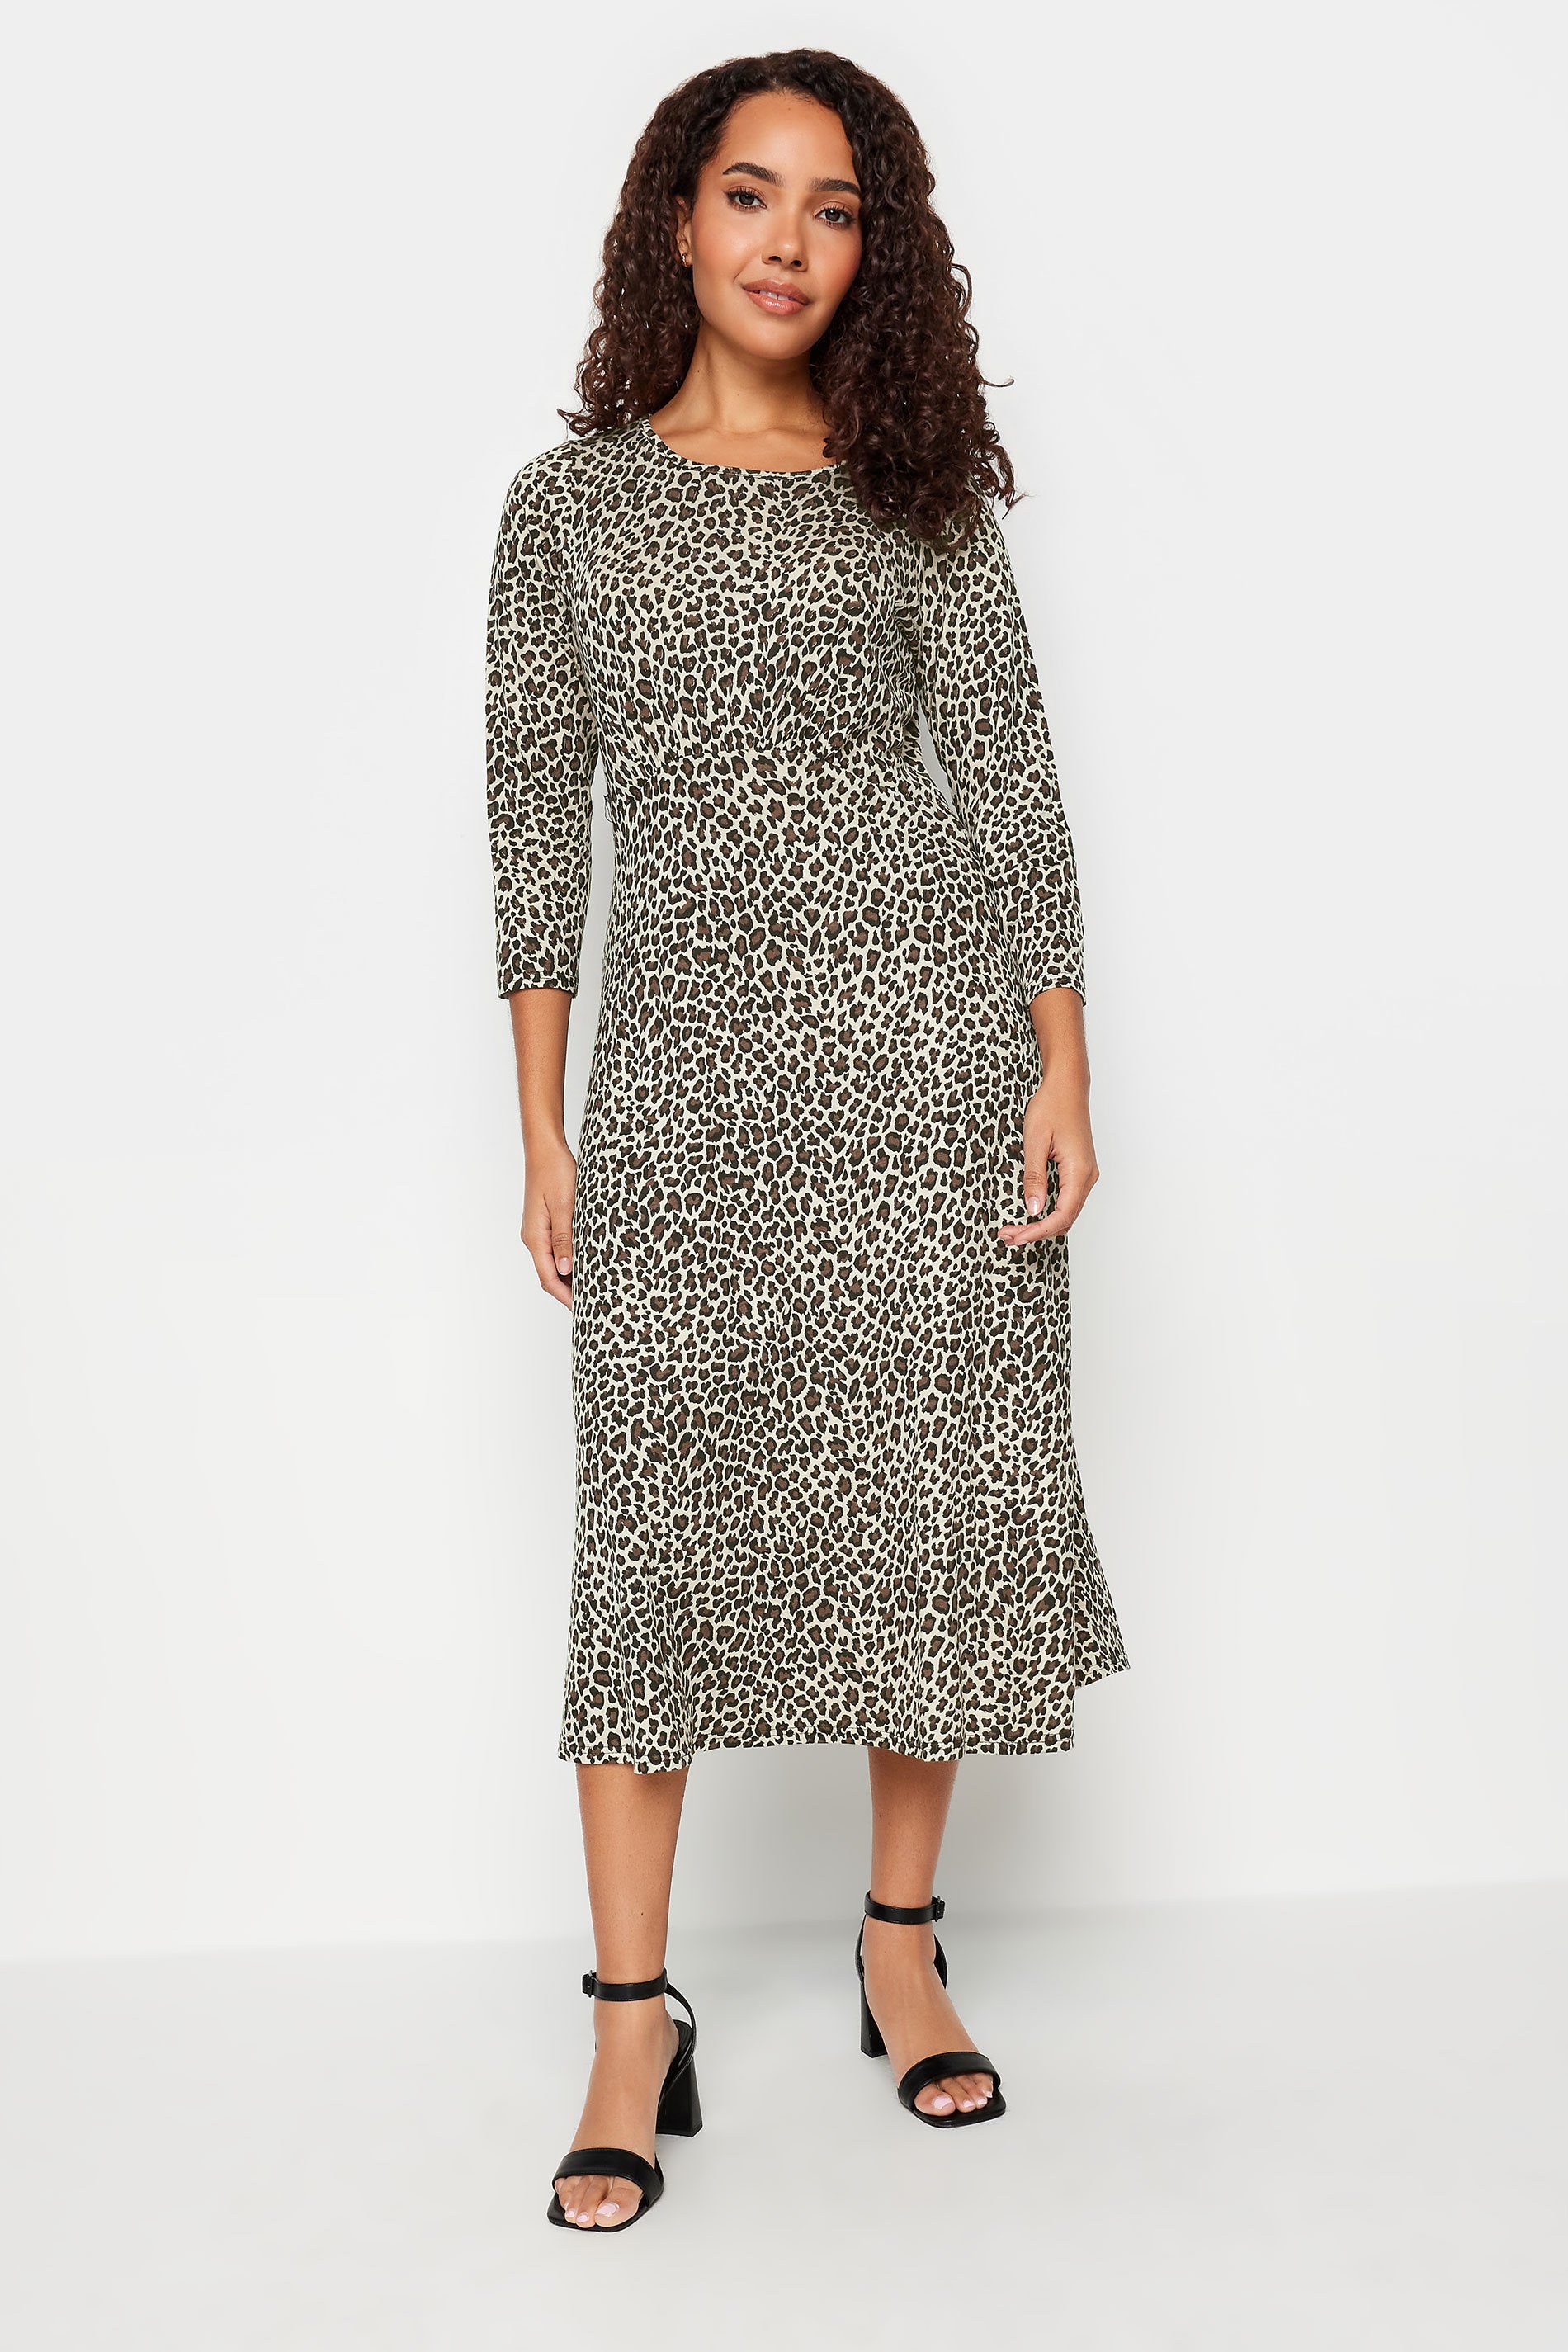 M&Co Natural Brown Leopard Print Midi Dress | M&Co